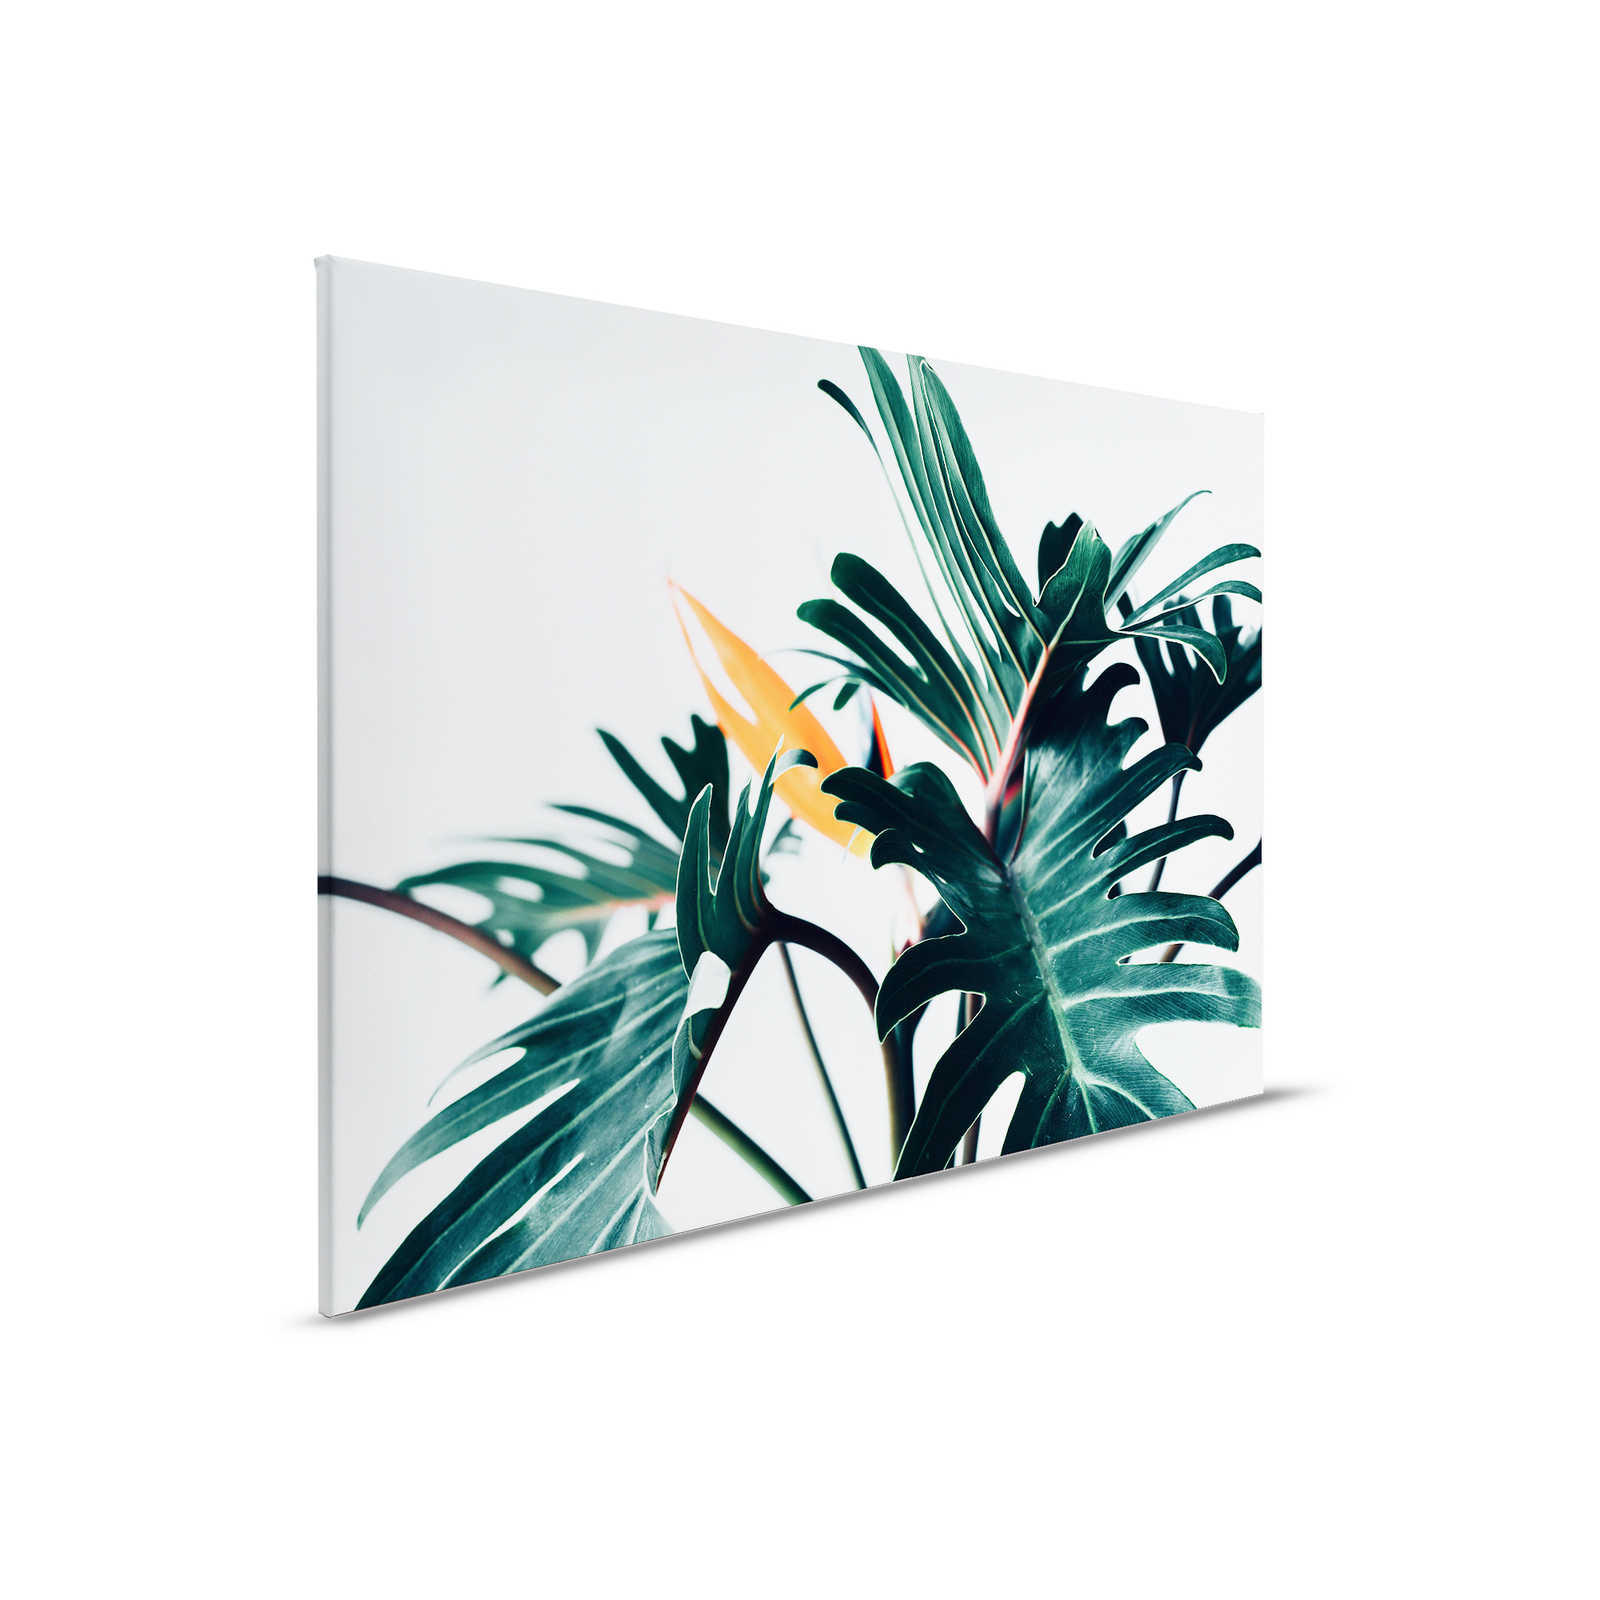         Canvas painting tropical jungle leaf close-up - 0,90 m x 0,60 m
    